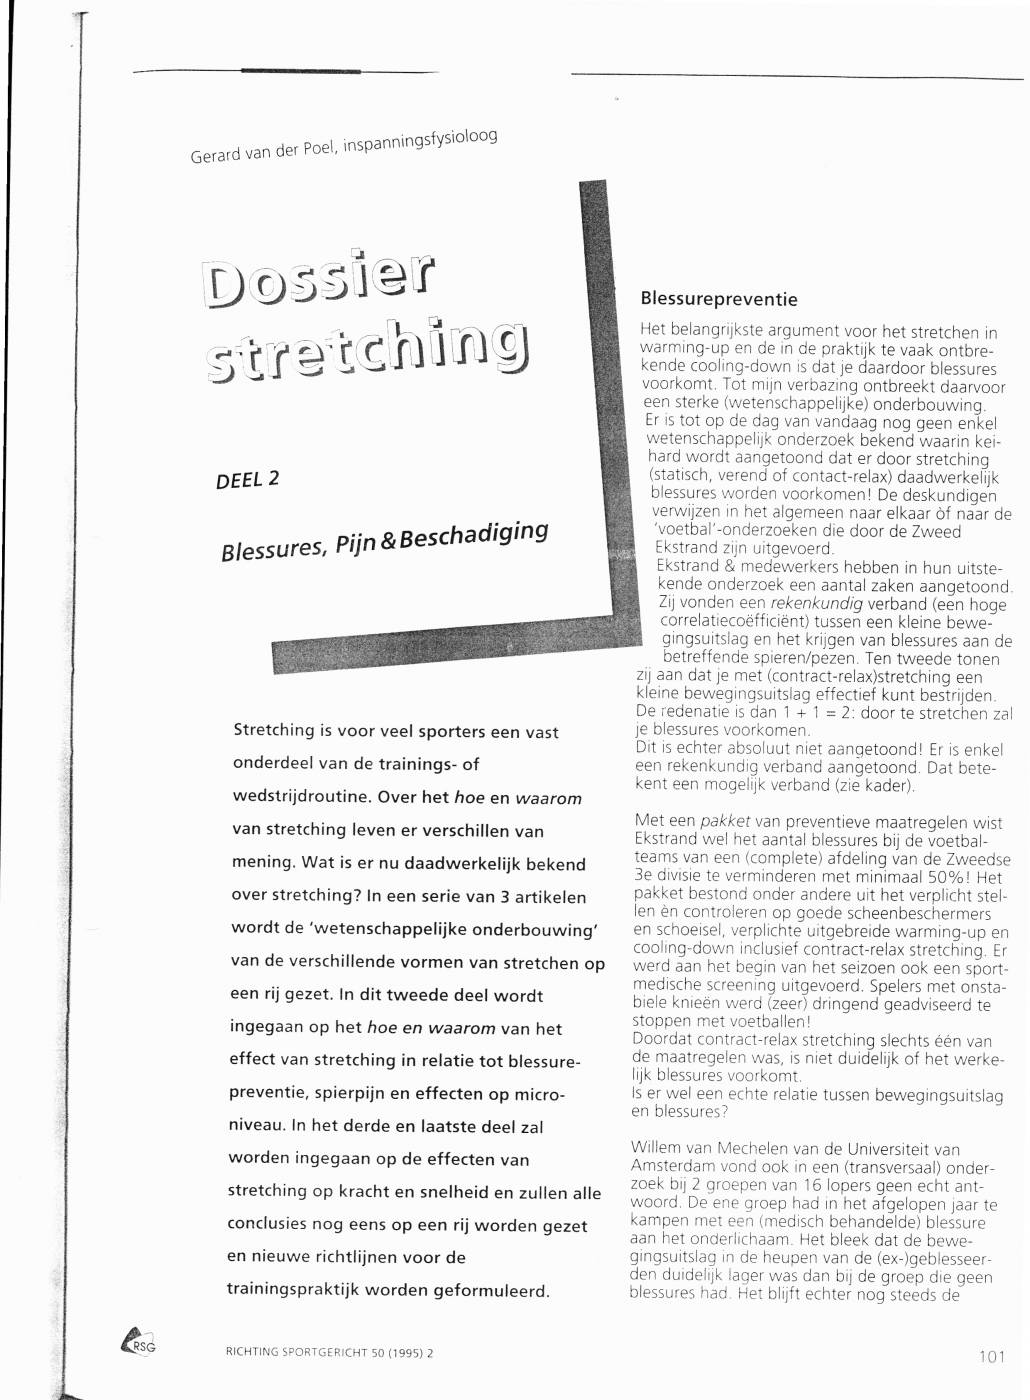 Dossier Stretching deel 2